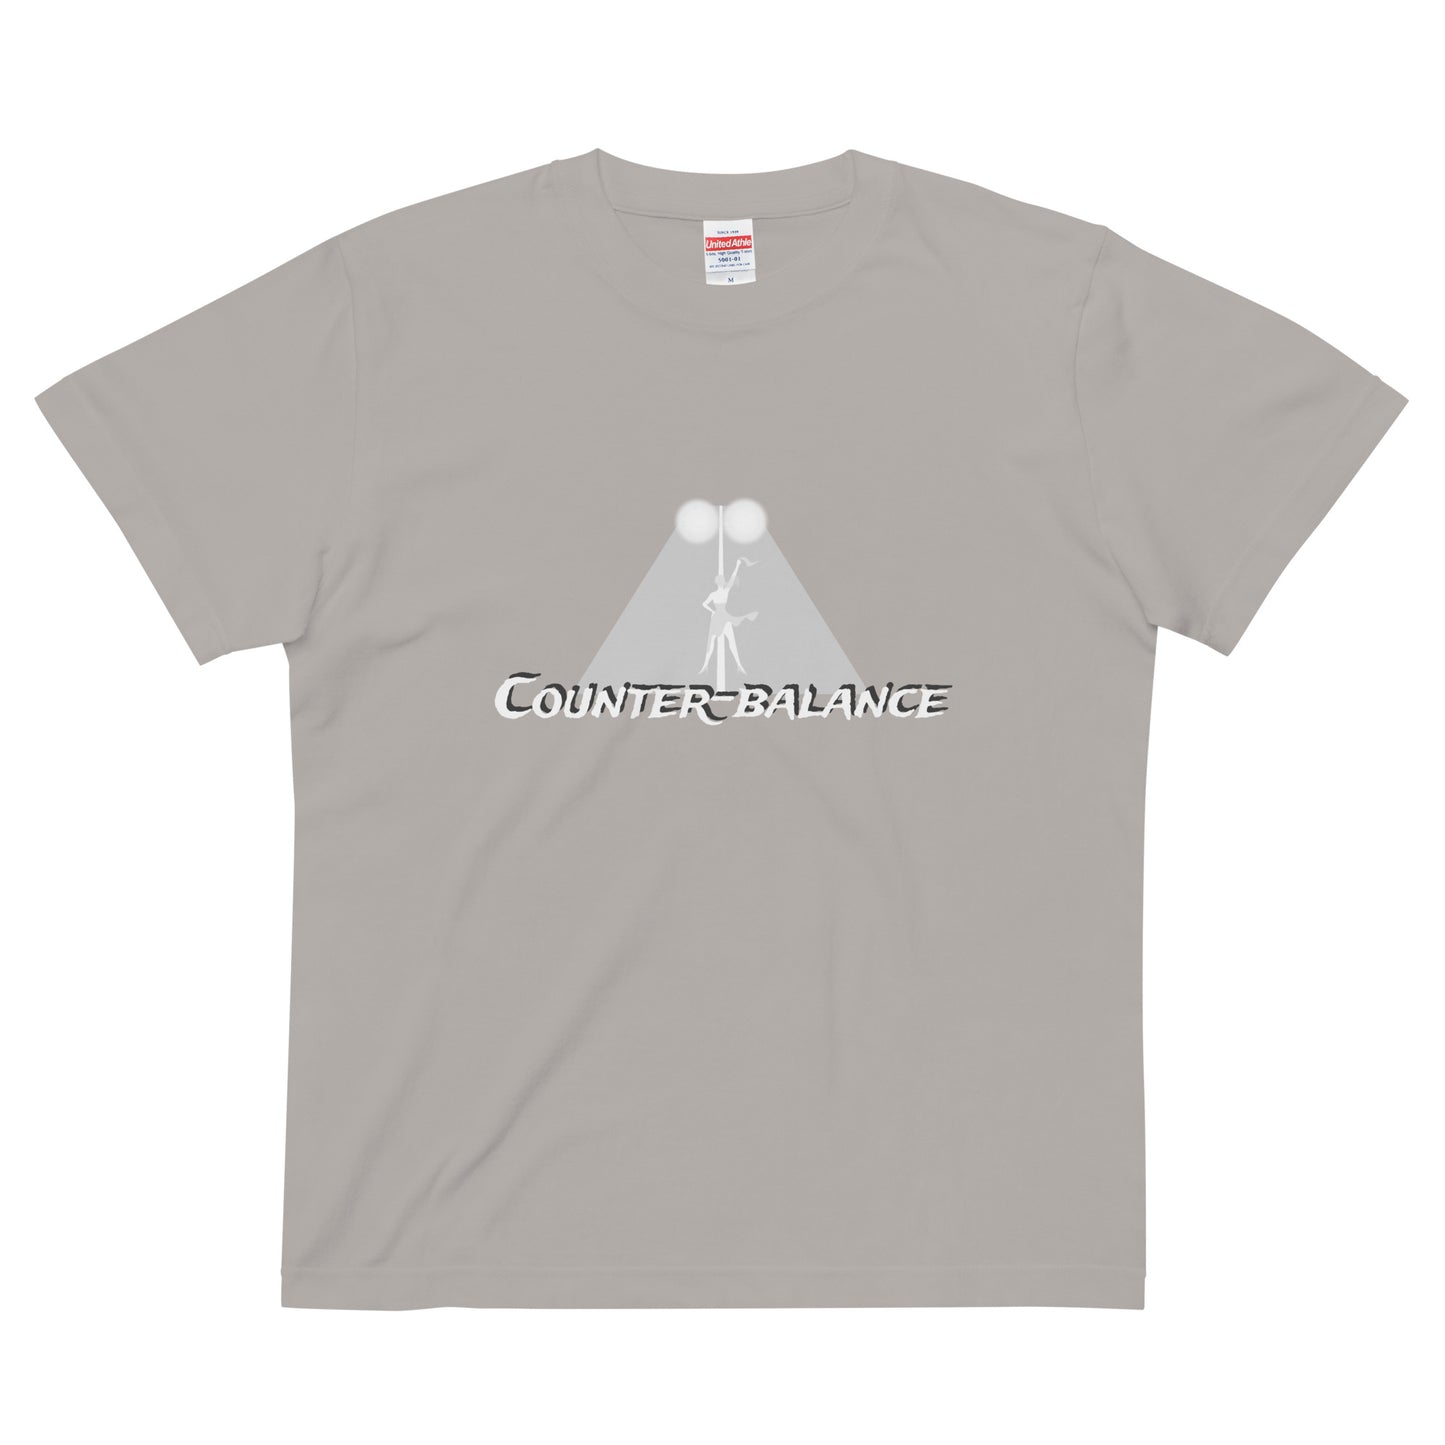 P016 - High Quality Cotton T-shirt (Get set! : Gray/Silver)